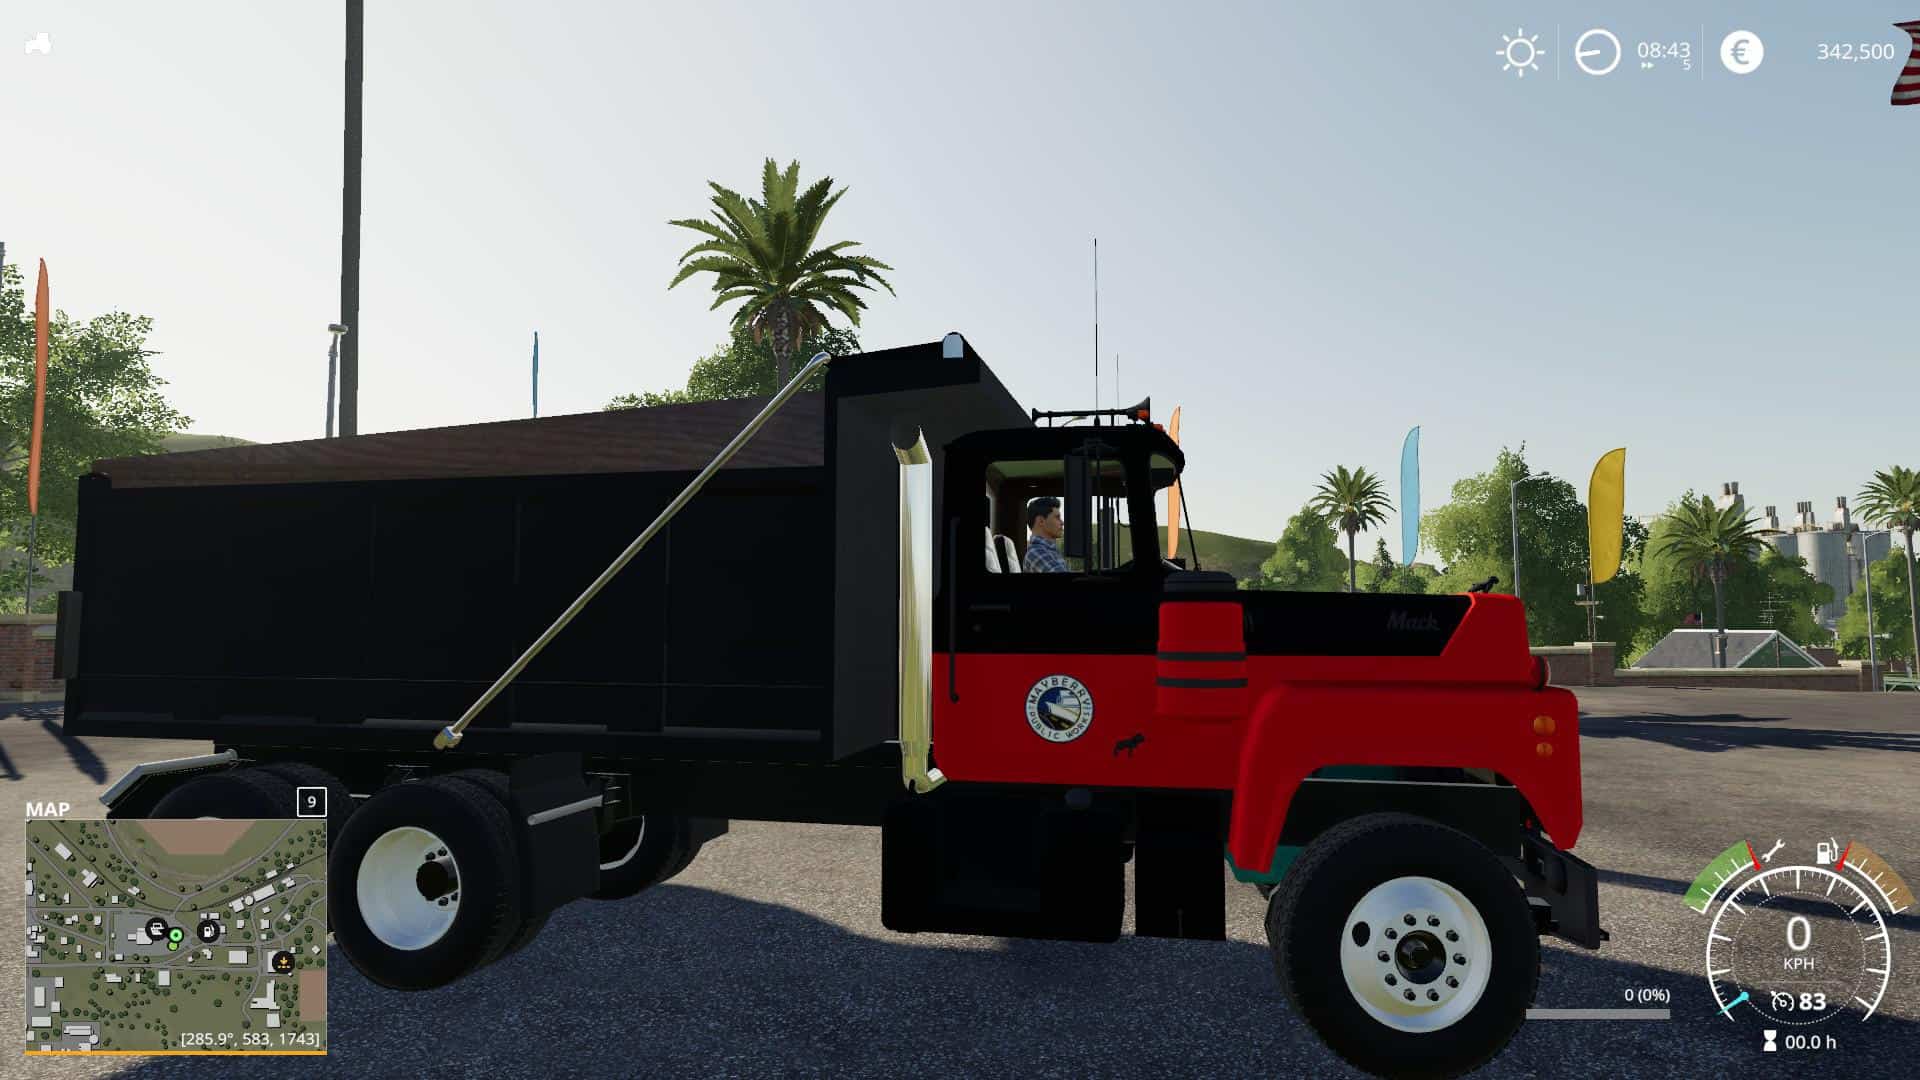 Mack R dump truck v1.0 Mod - Farming Simulator 19 Mod / FS19